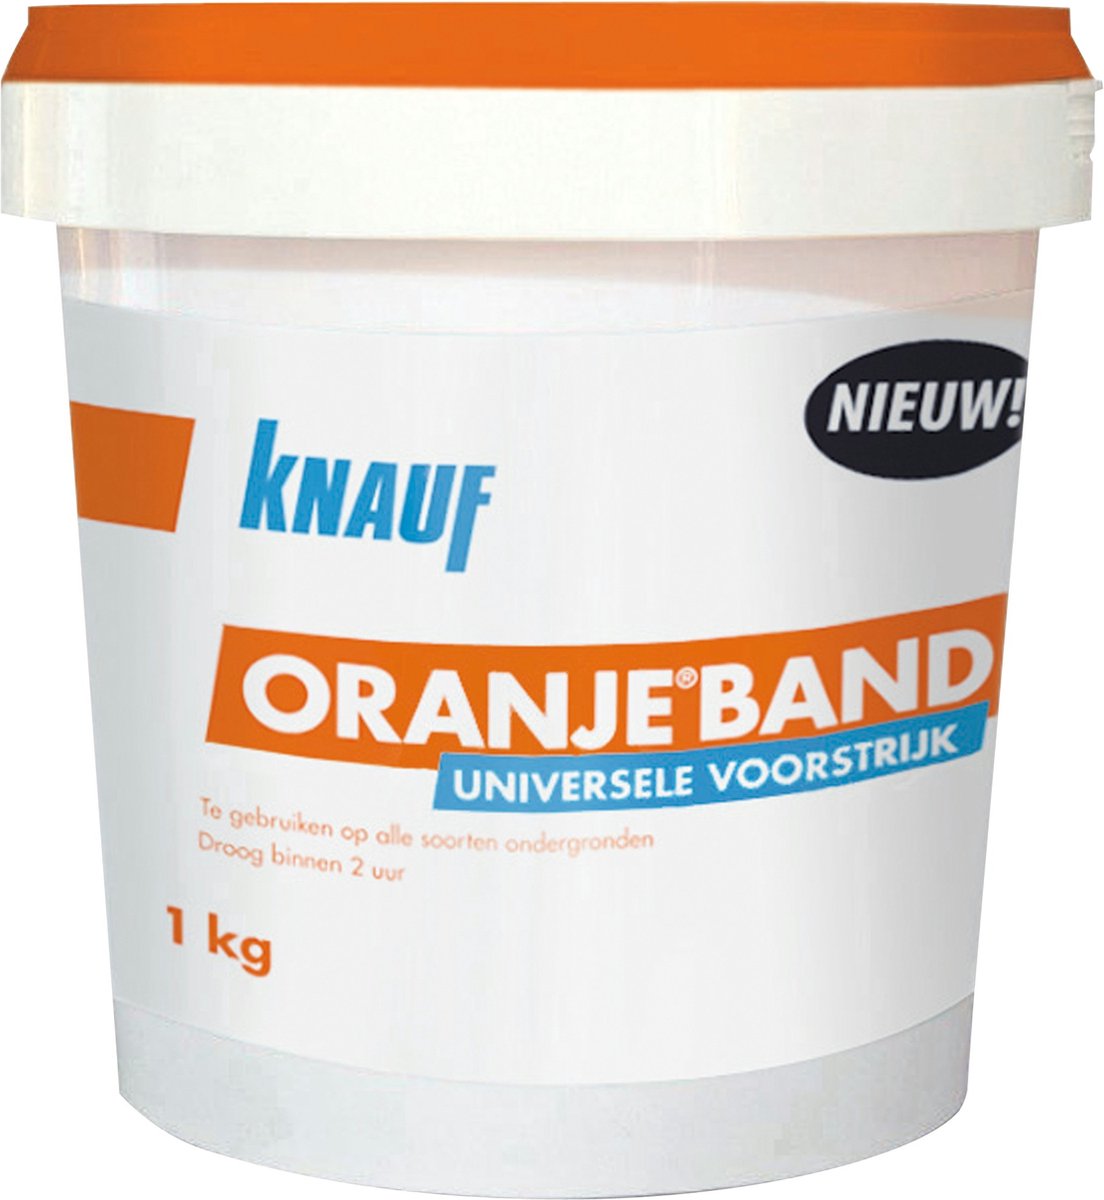 Knauf Oranjeband universele voorstrijk 1 kg